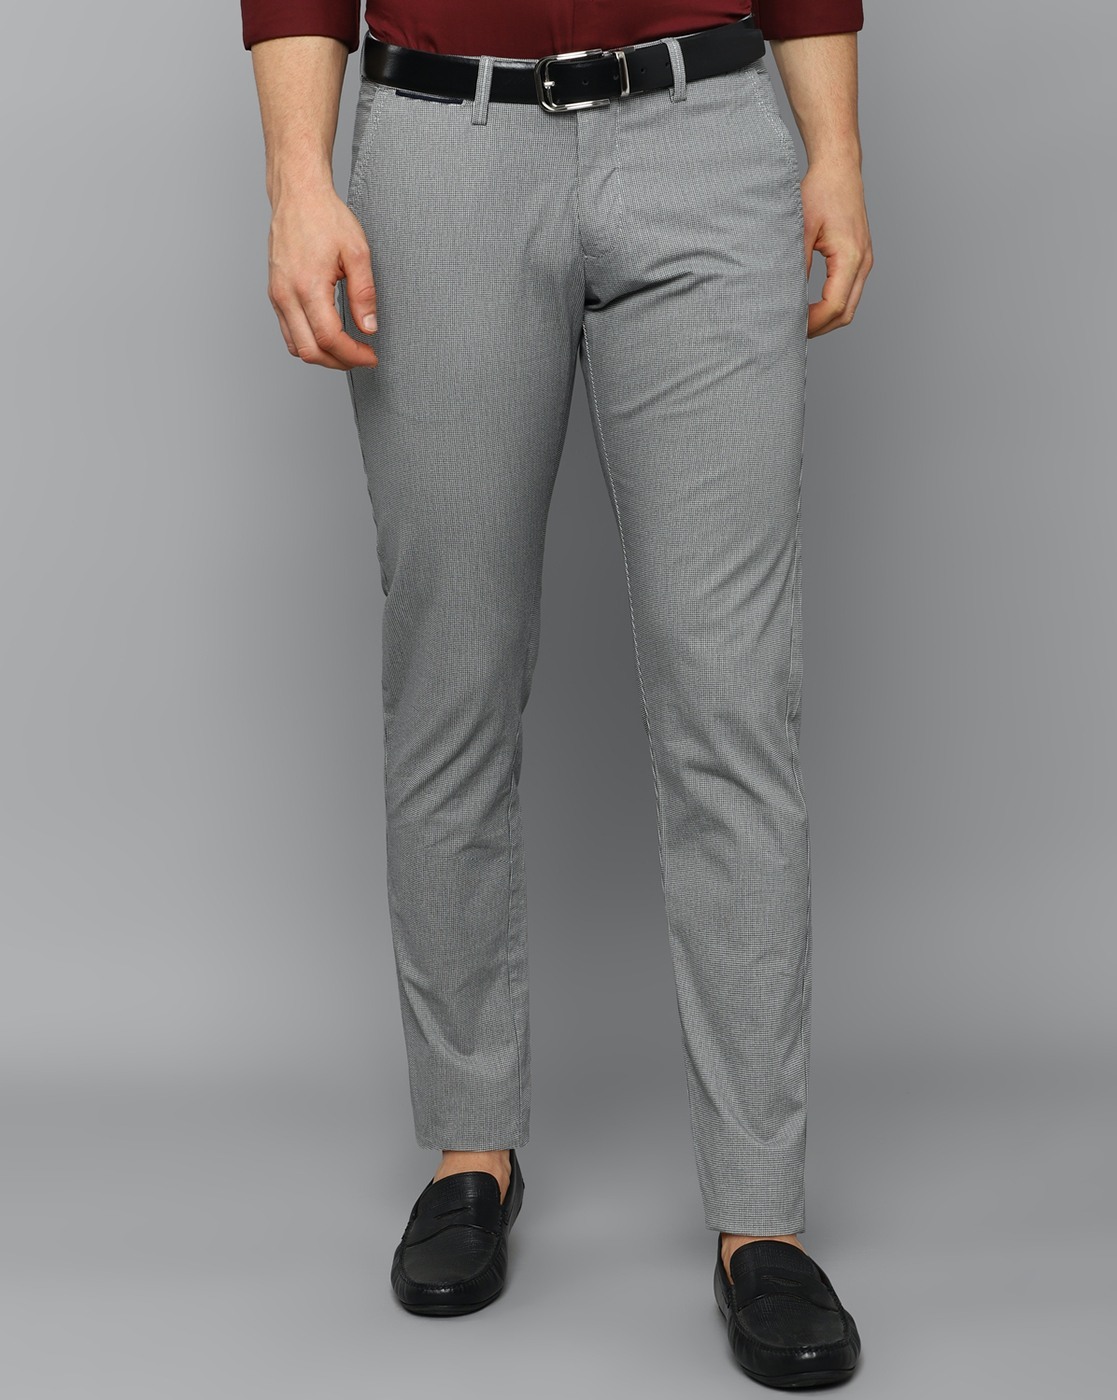 Buy Allen Solly Men Solid Regular Fit Formal Trouser  Beige Online at Low  Prices in India  Paytmmallcom